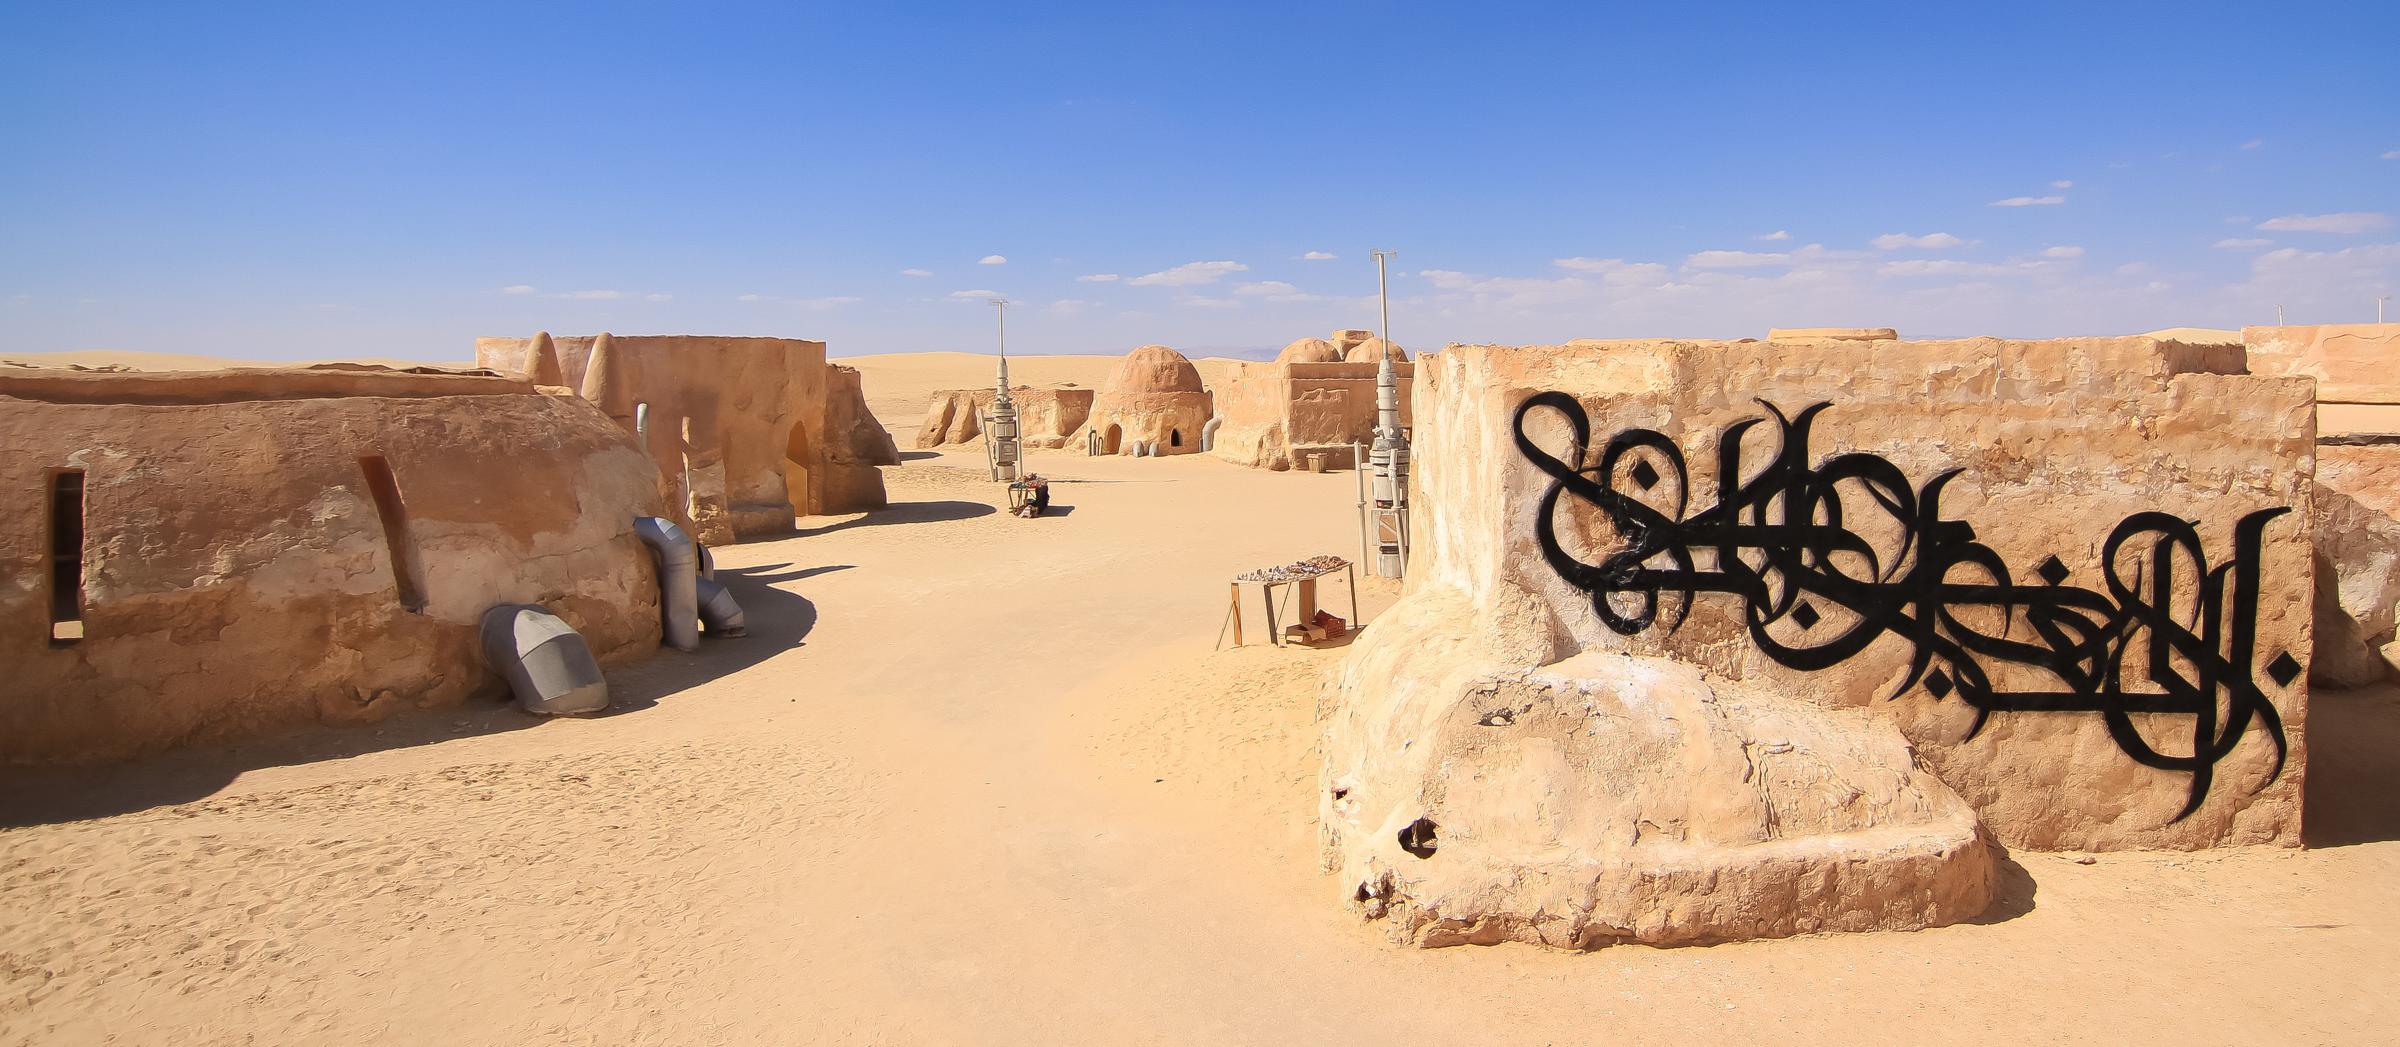 Artist: eL SeedTitle: Lost Wall - Star Wars Film Set Location: Onk el Jmel, TunisiaCredit: Itinerrance gallery / eL Seed